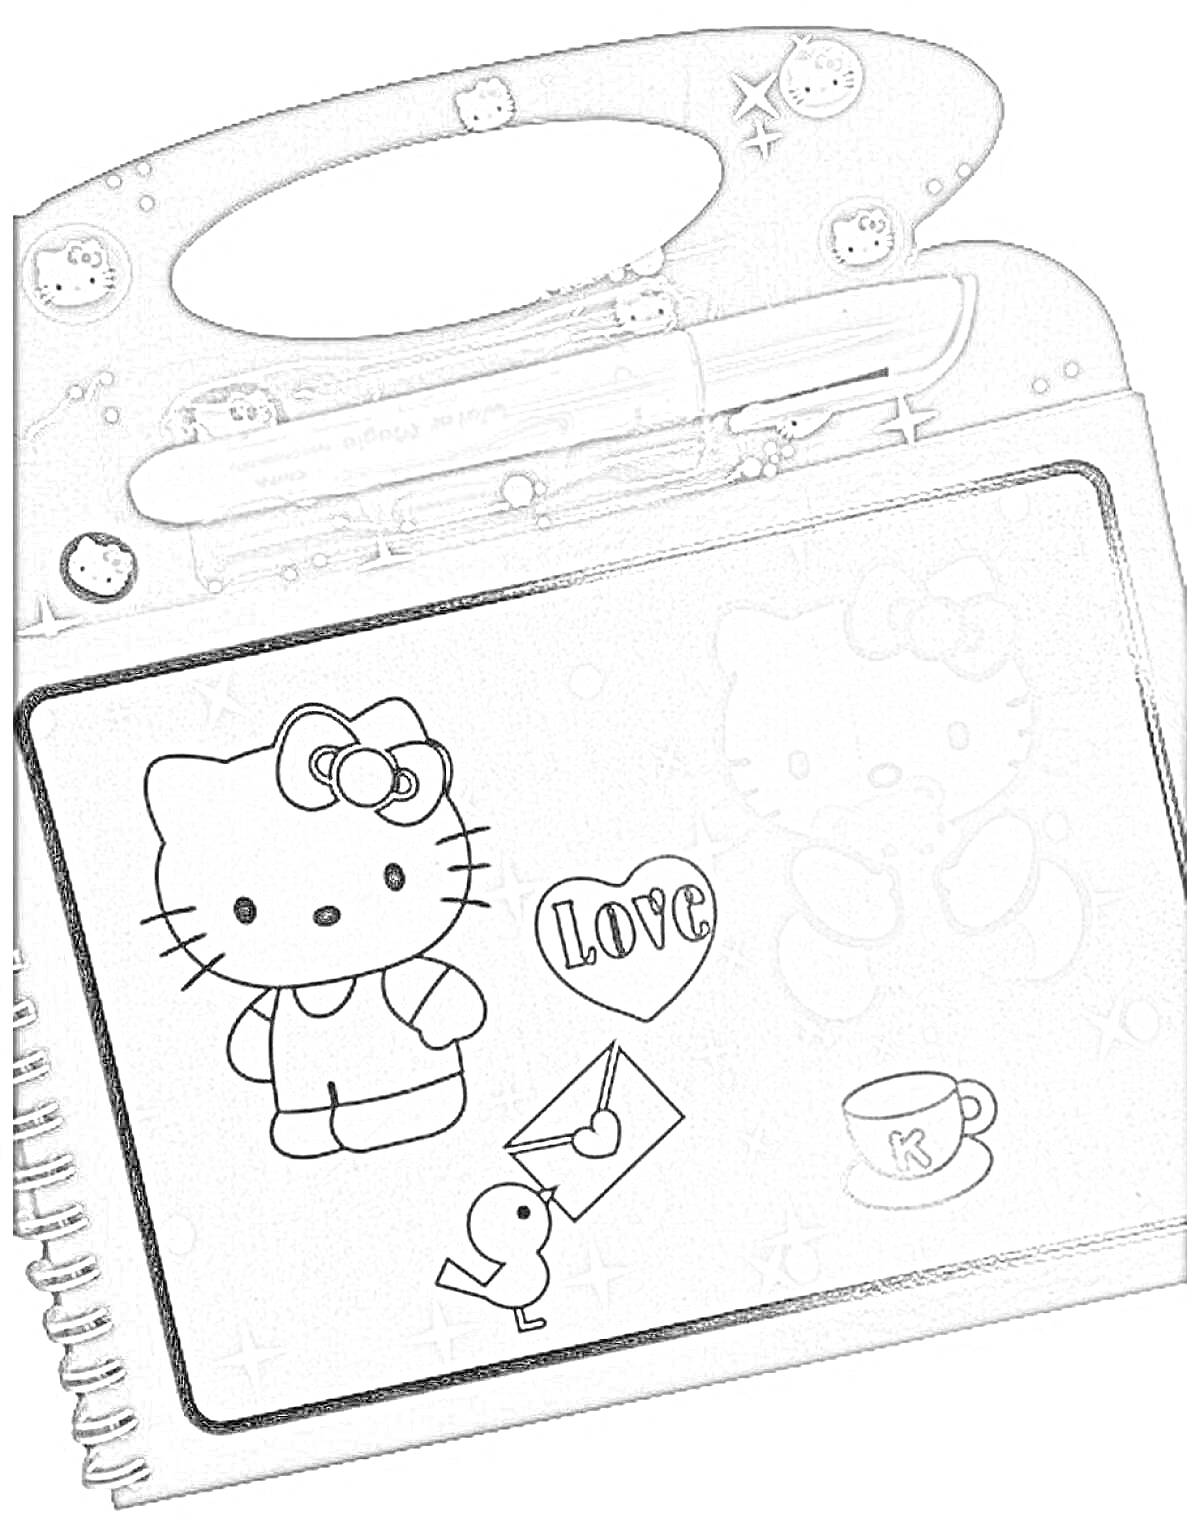 Раскраска Раскраска Hello Kitty с водяным фломастером, изображение Hello Kitty, сердце с надписью 